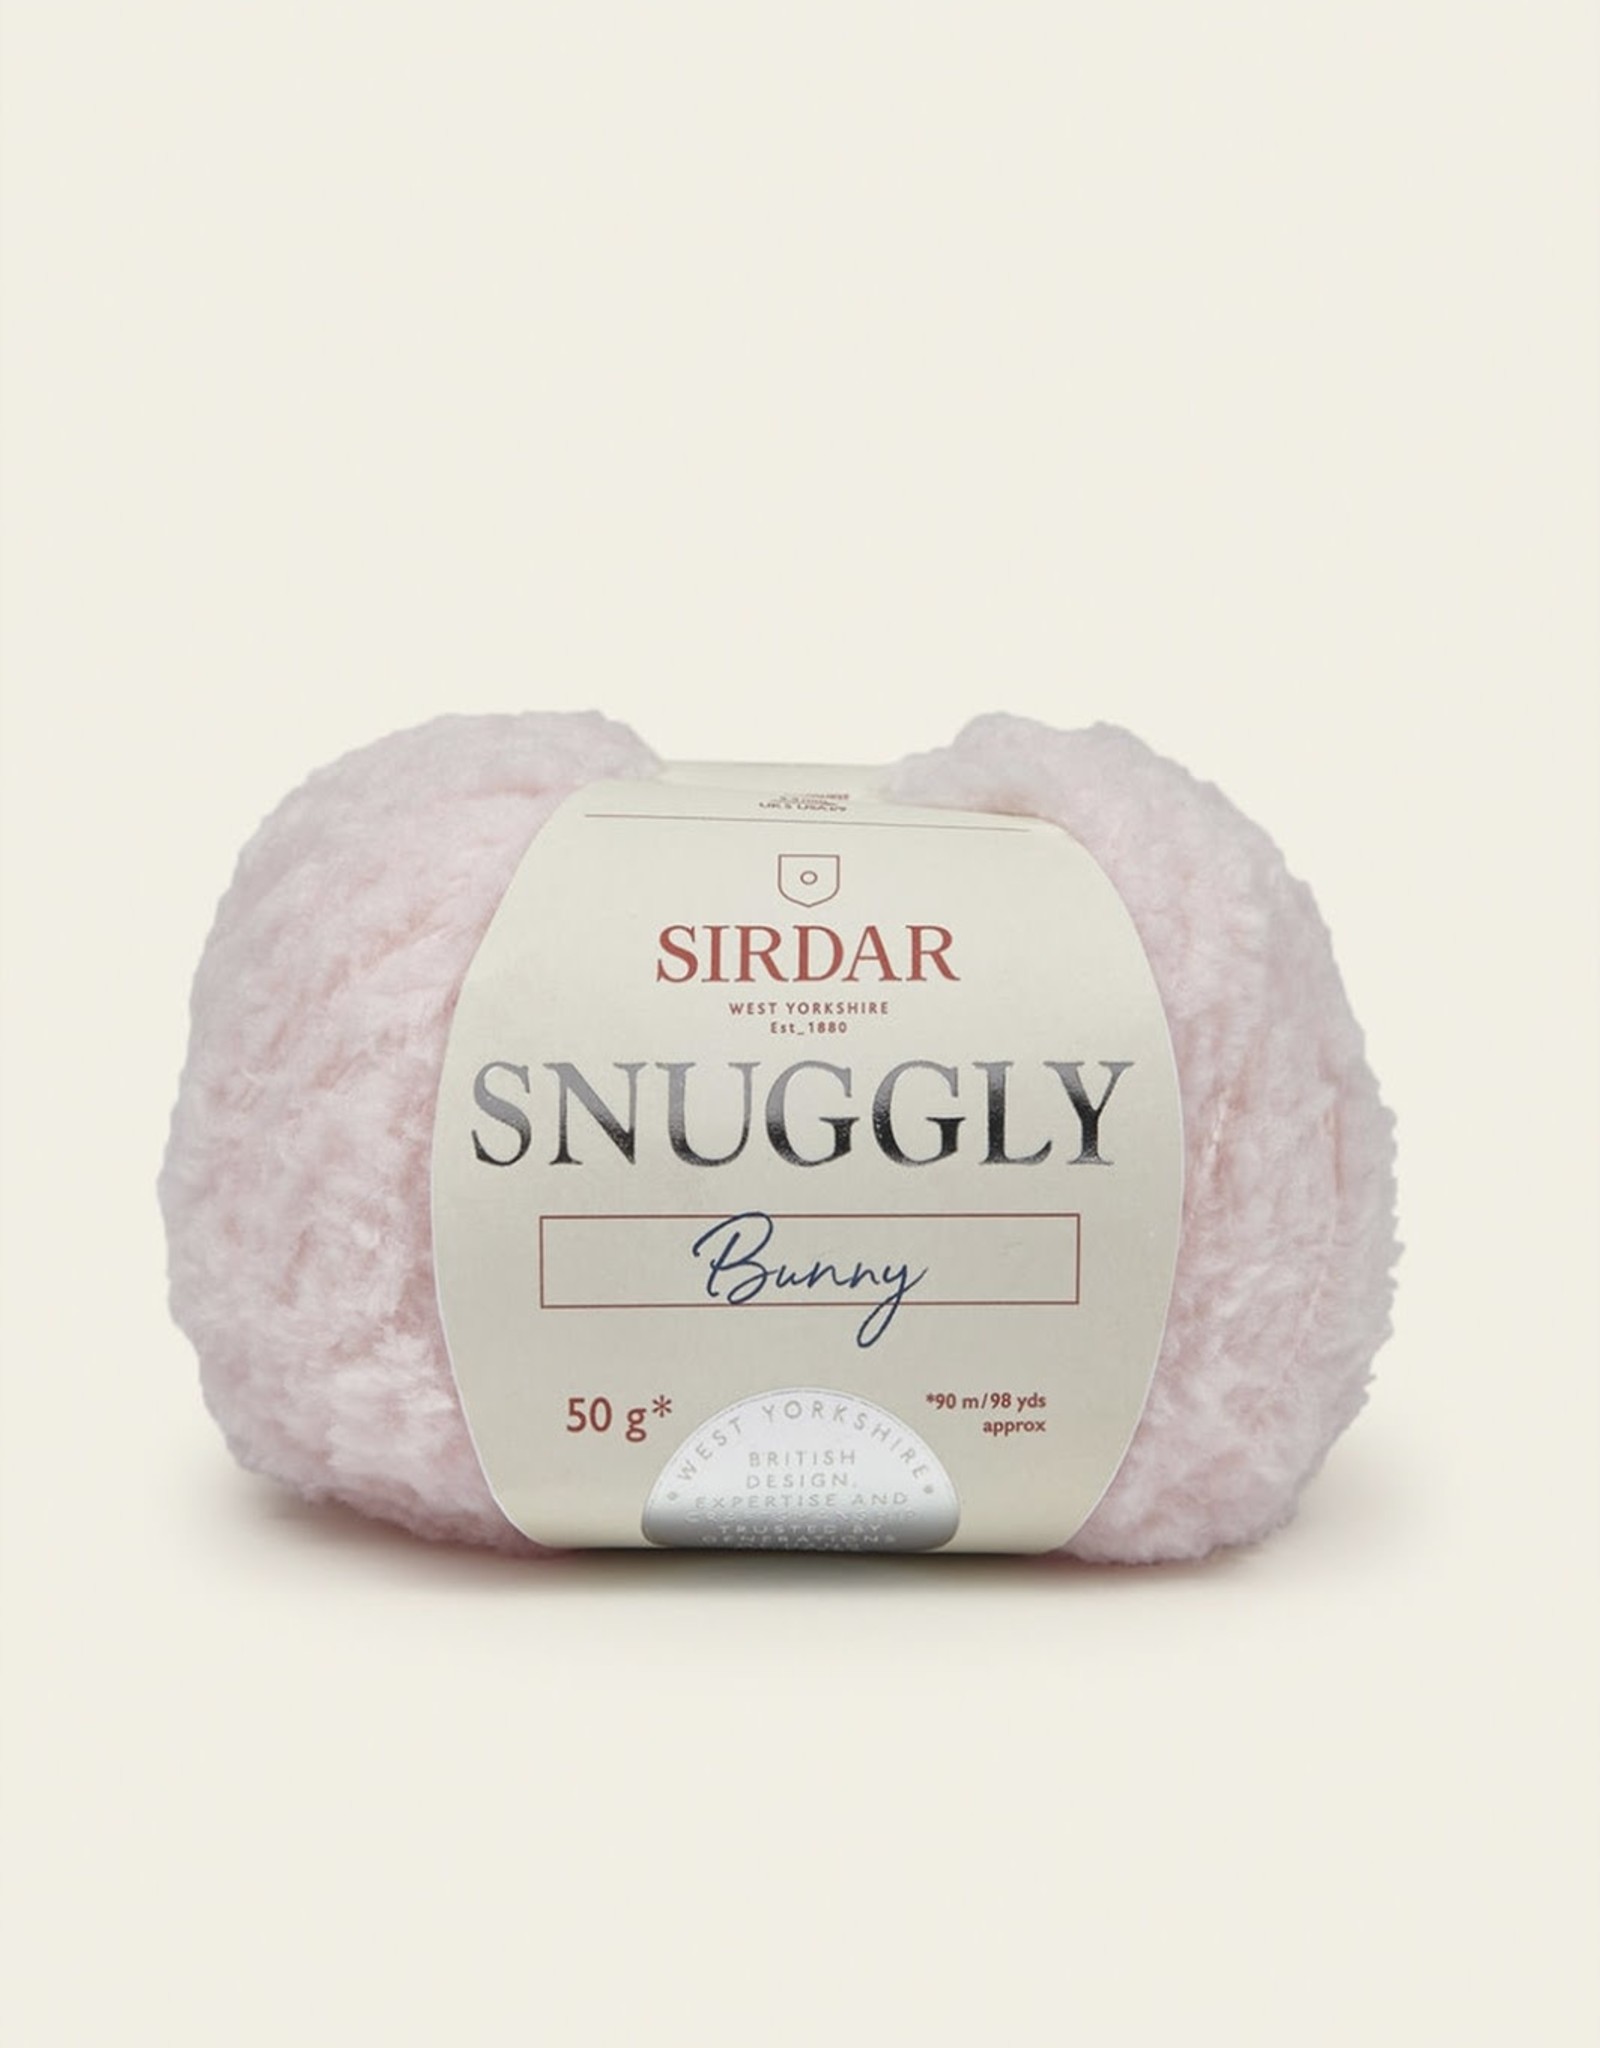 Sirdar Snuggly Bunny 314 piglet